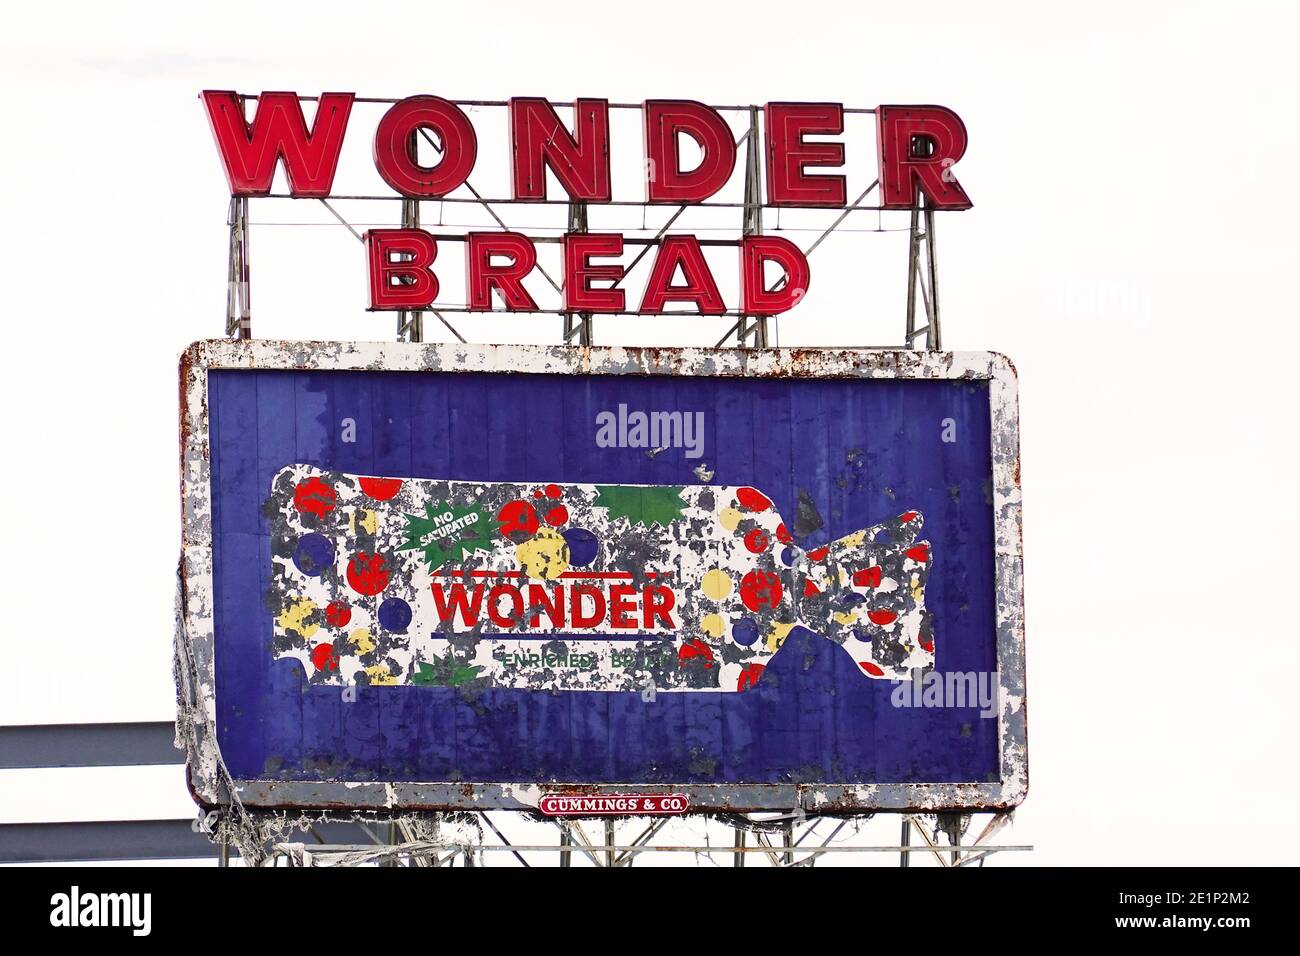 Wonder Bread billboard sign in Memphis TN Stock Photo